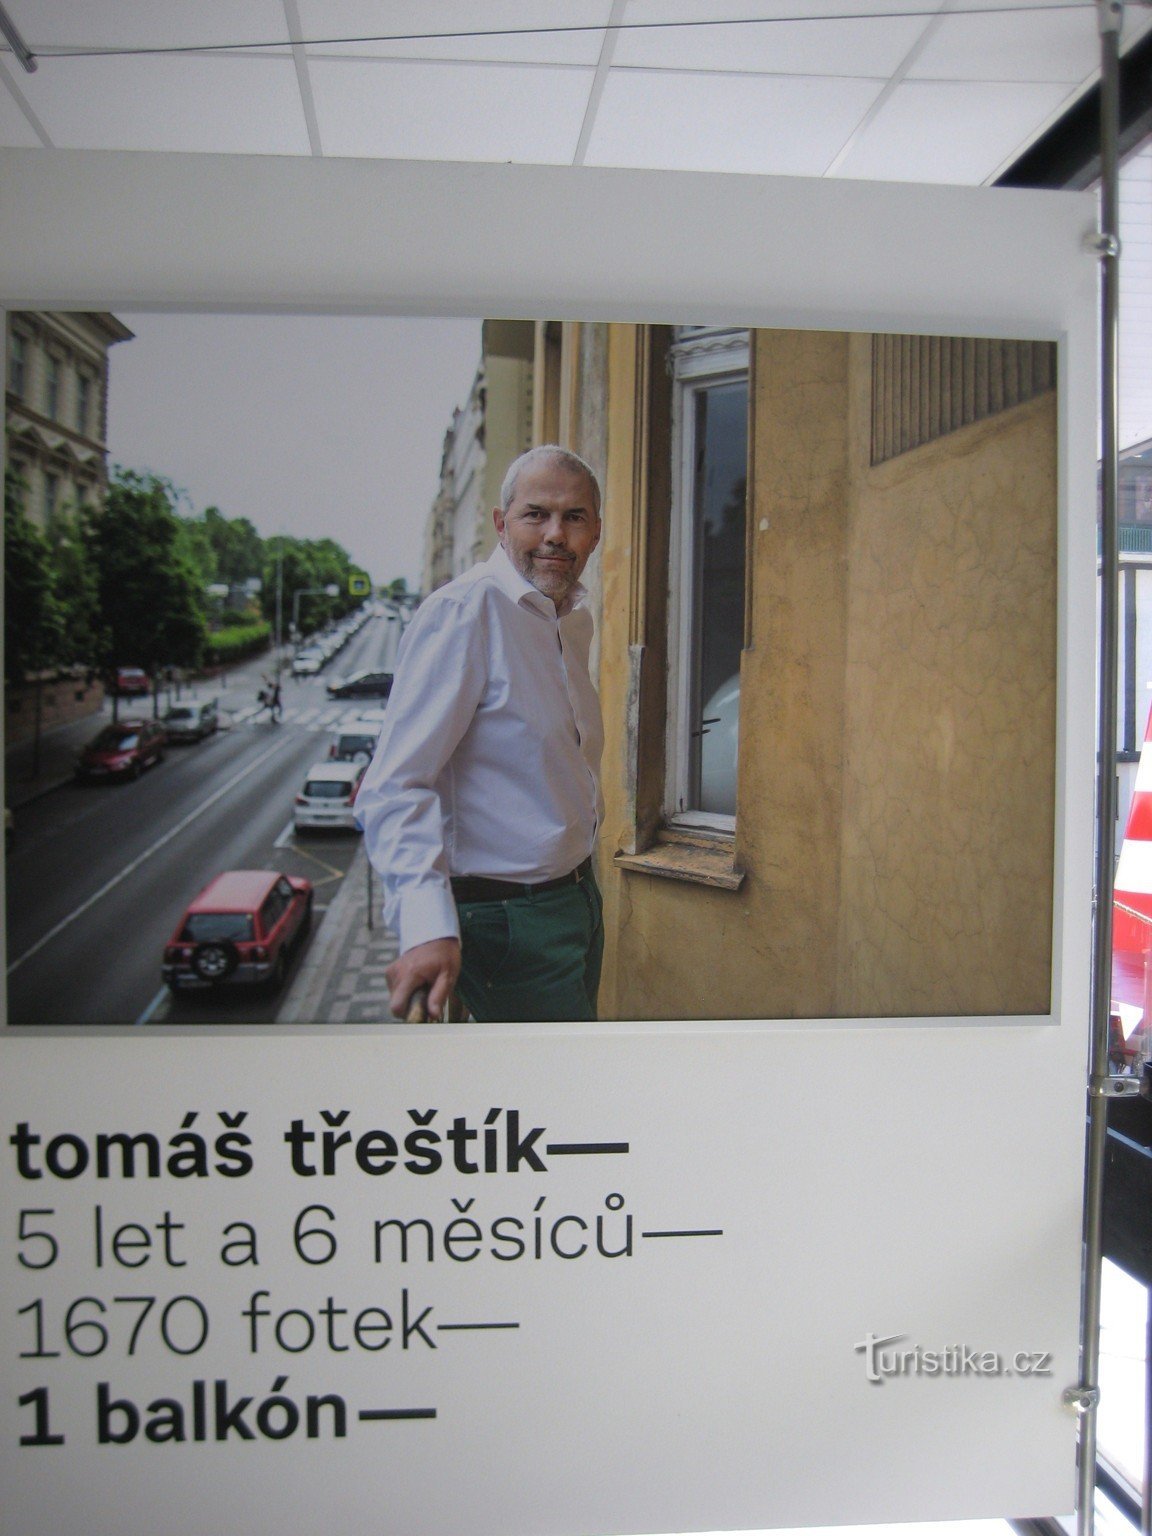 Tomáš Třeštík – 5 años y 6 meses, 1670 fotos y 1 balcón - Karlovy Vary